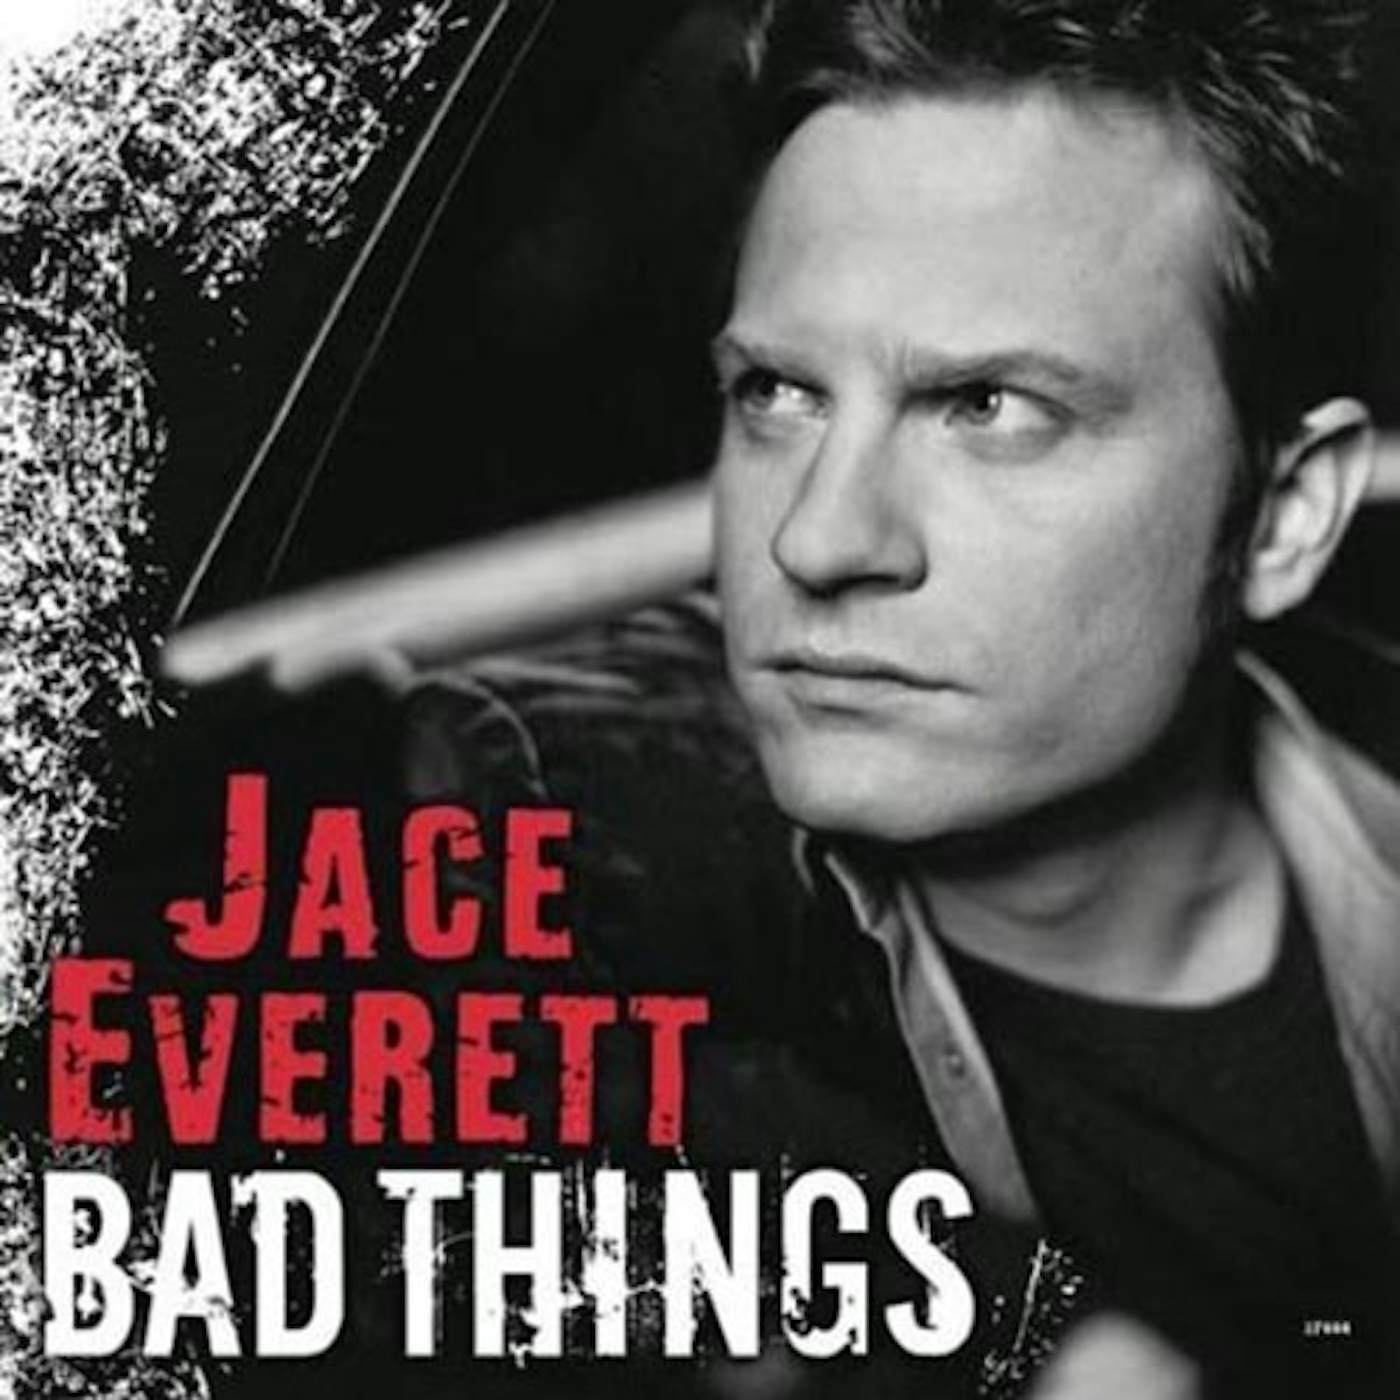 Jace Everett Bad Things Vinyl Record